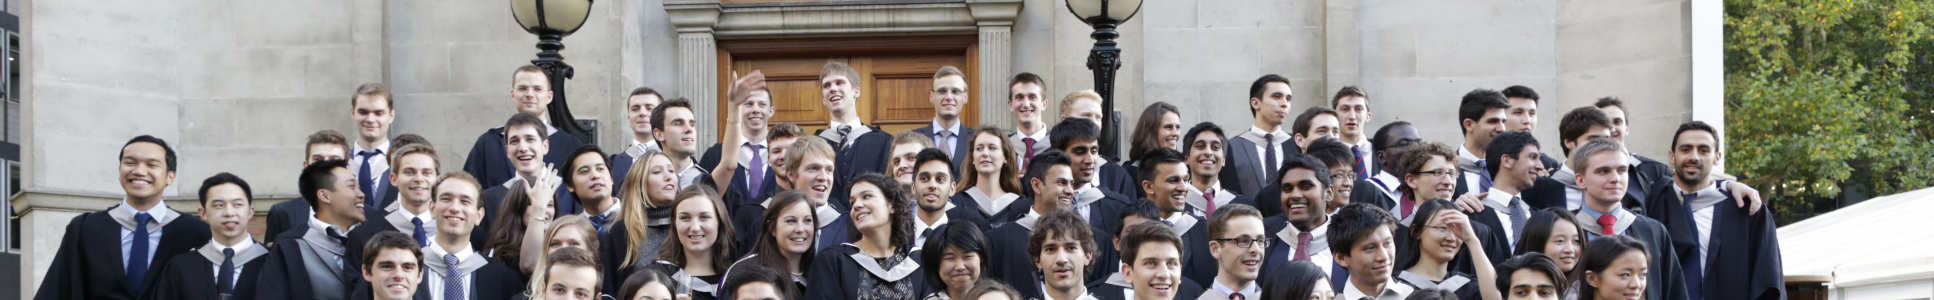 Graduates at Imperial College London 